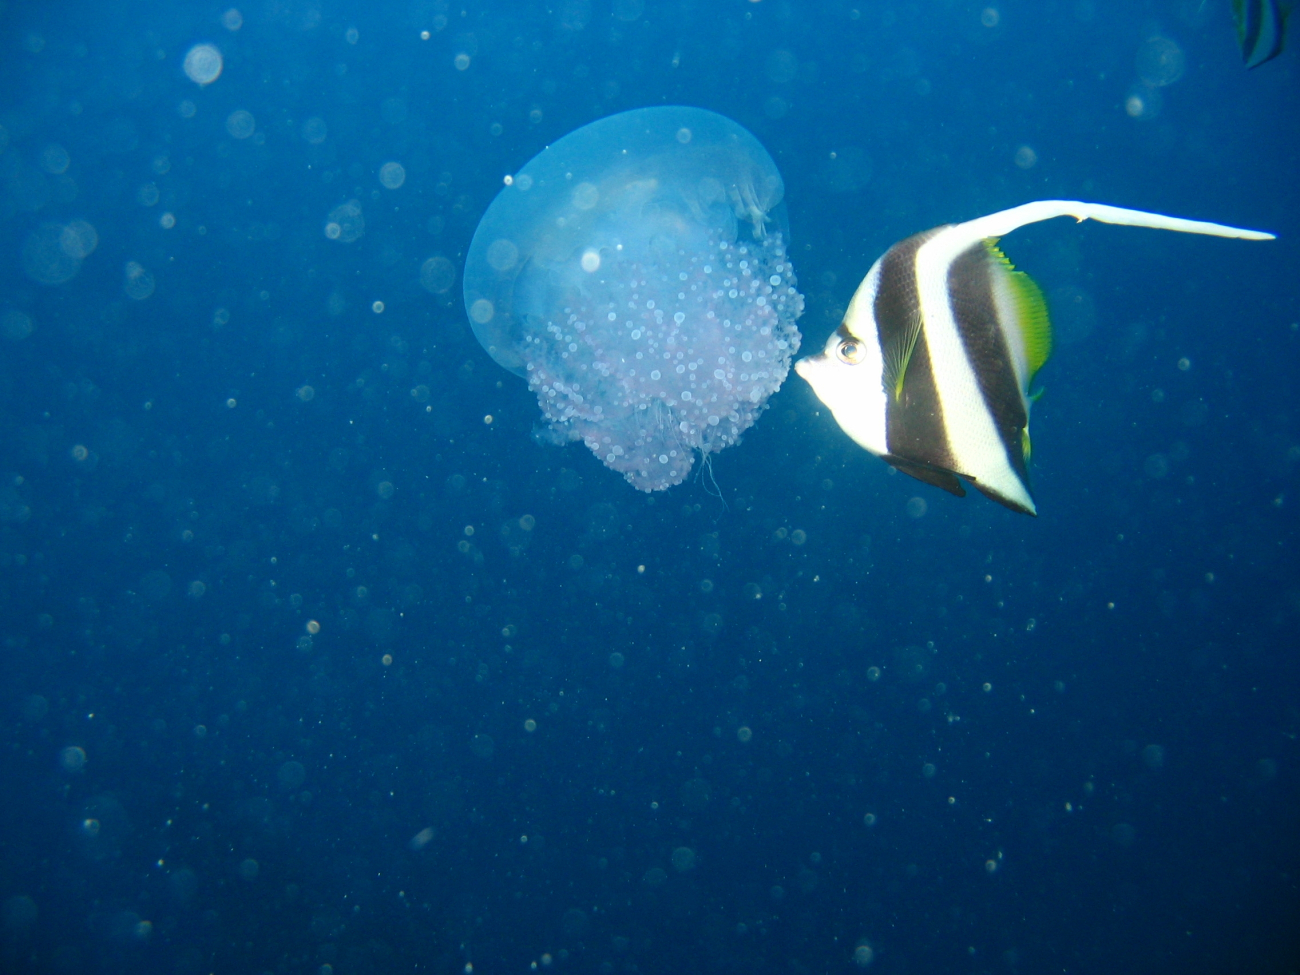 Jellyfish being nibbled on by longfin bannerfish (Heniochus acuminatus)